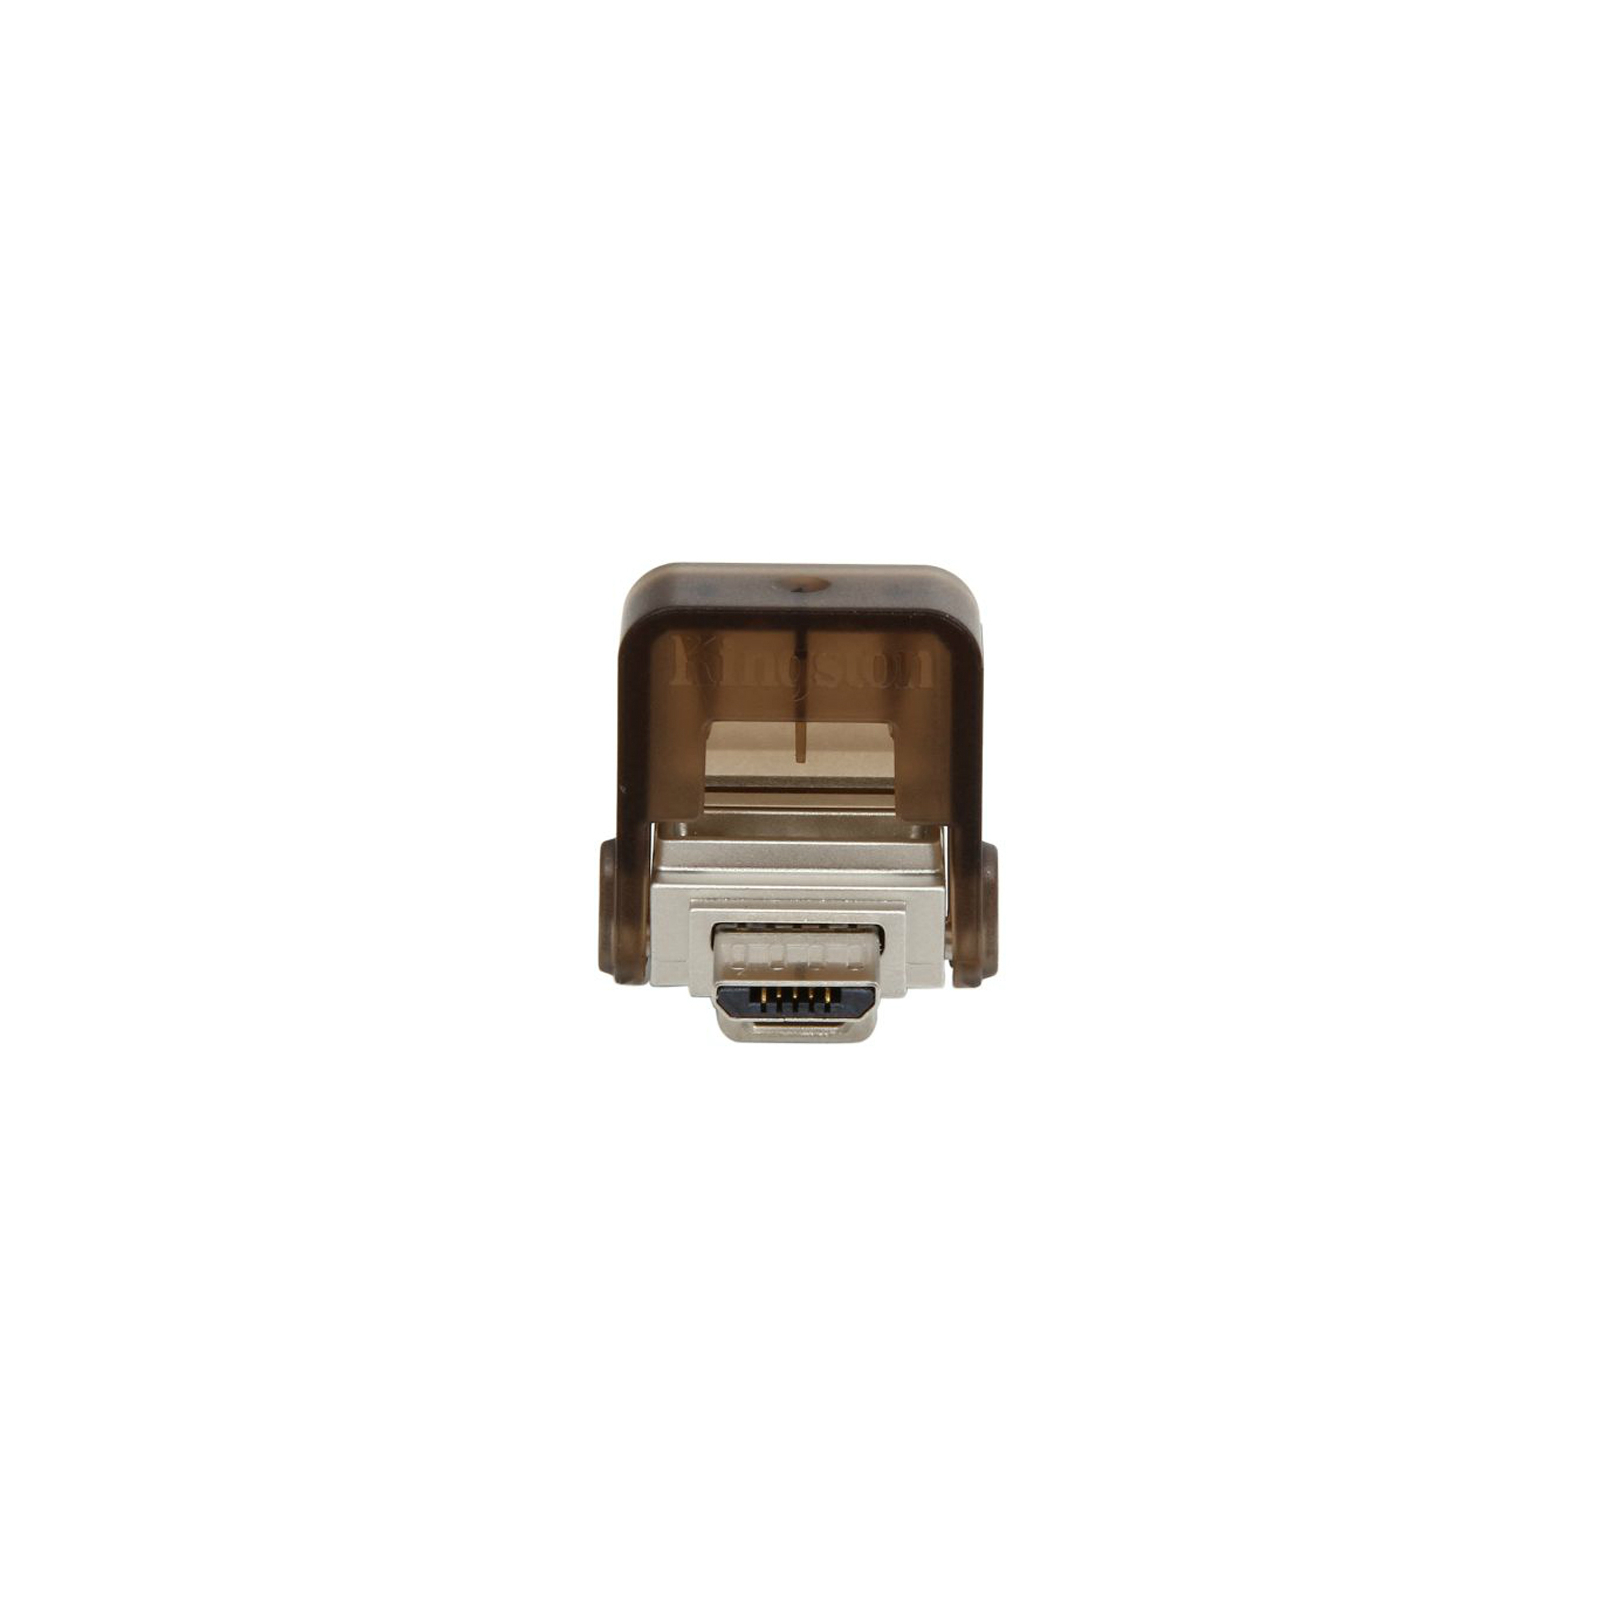 USB флеш накопитель Kingston 32Gb DT MicroDuo (DTDUO/32GB) изображение 5